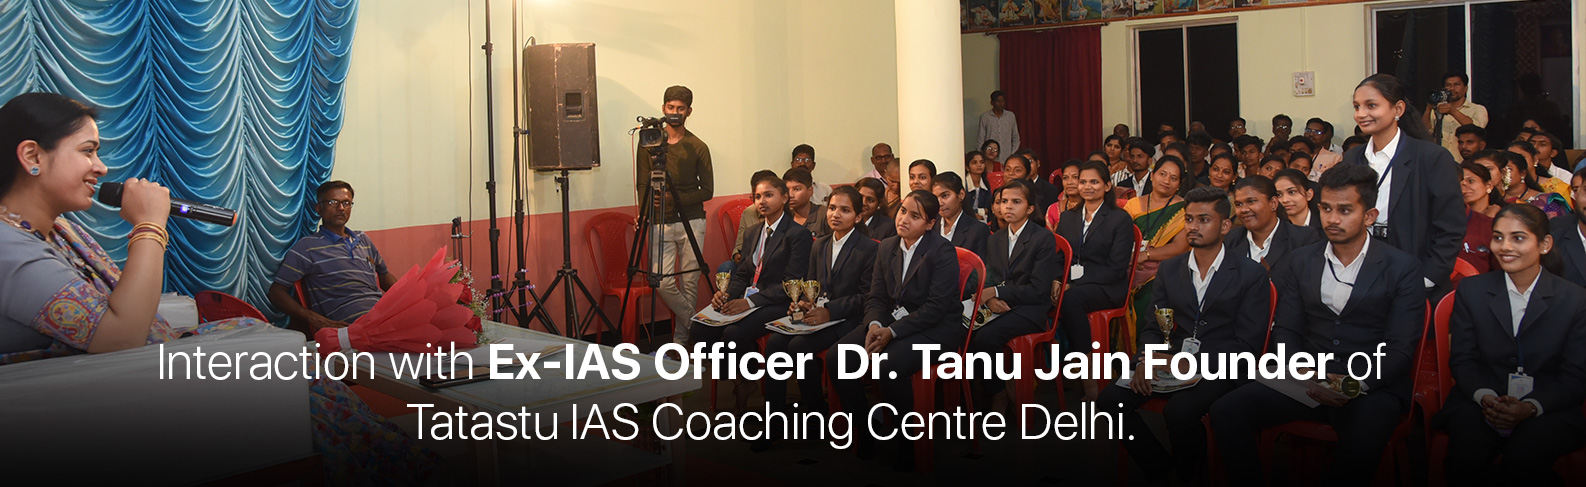 Interaction with Ex-IAS Officer Dr. Tanu Jain